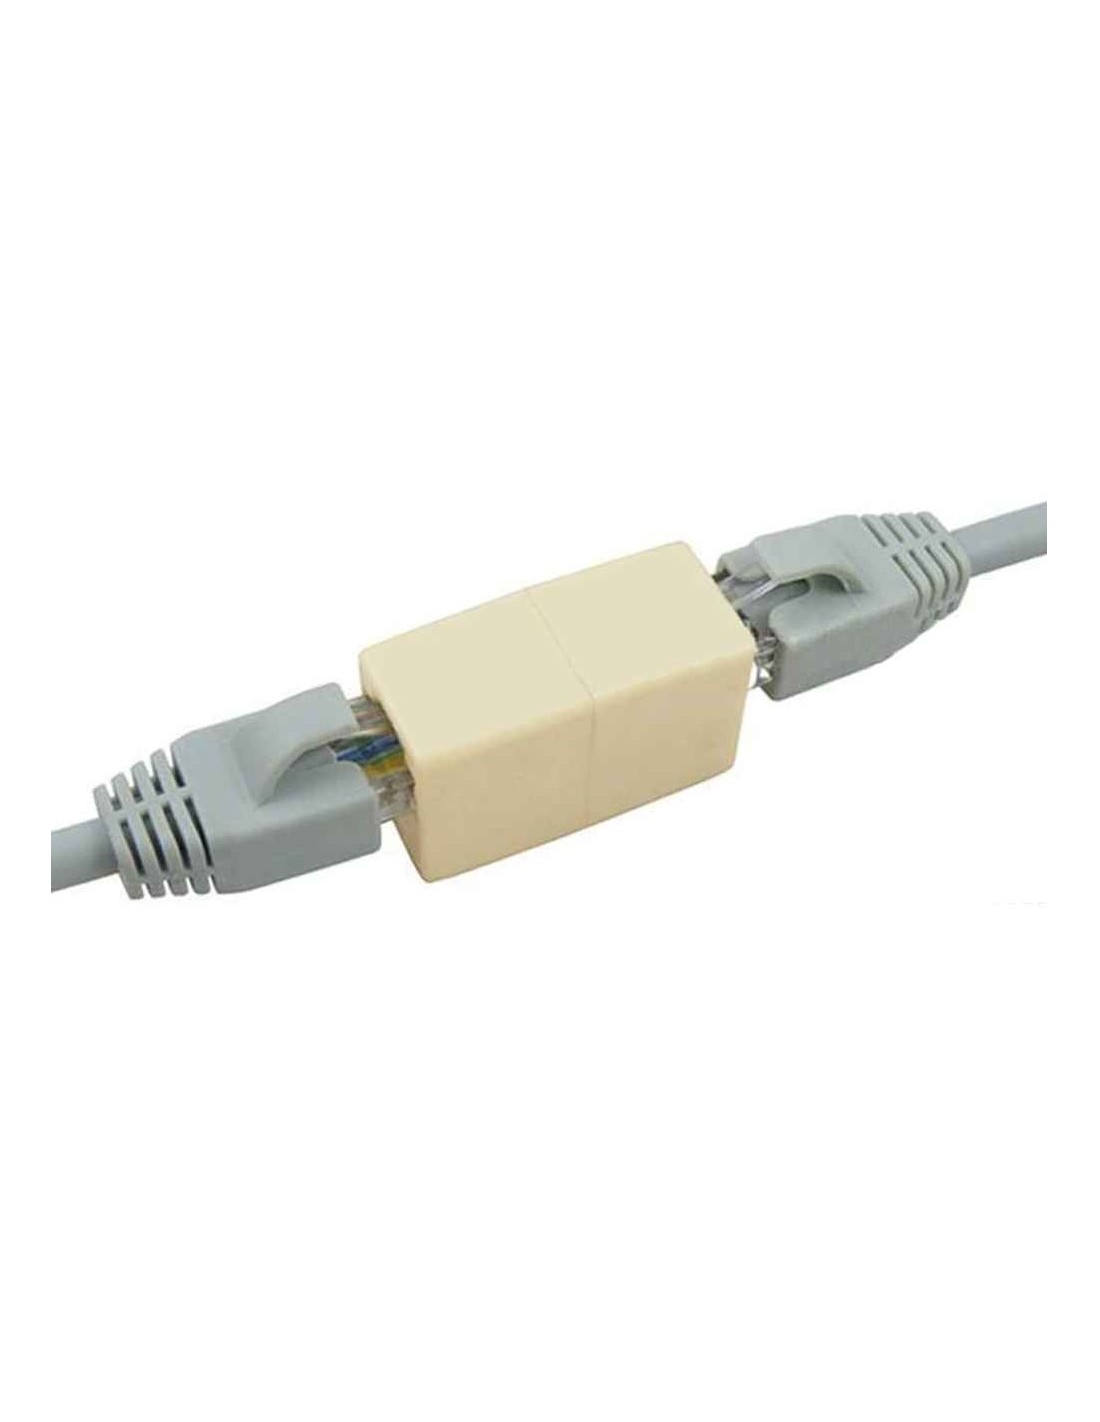 cat5-rj45-lan-network-ethernet-cable-extender-joiner-adapter-coupler-connector